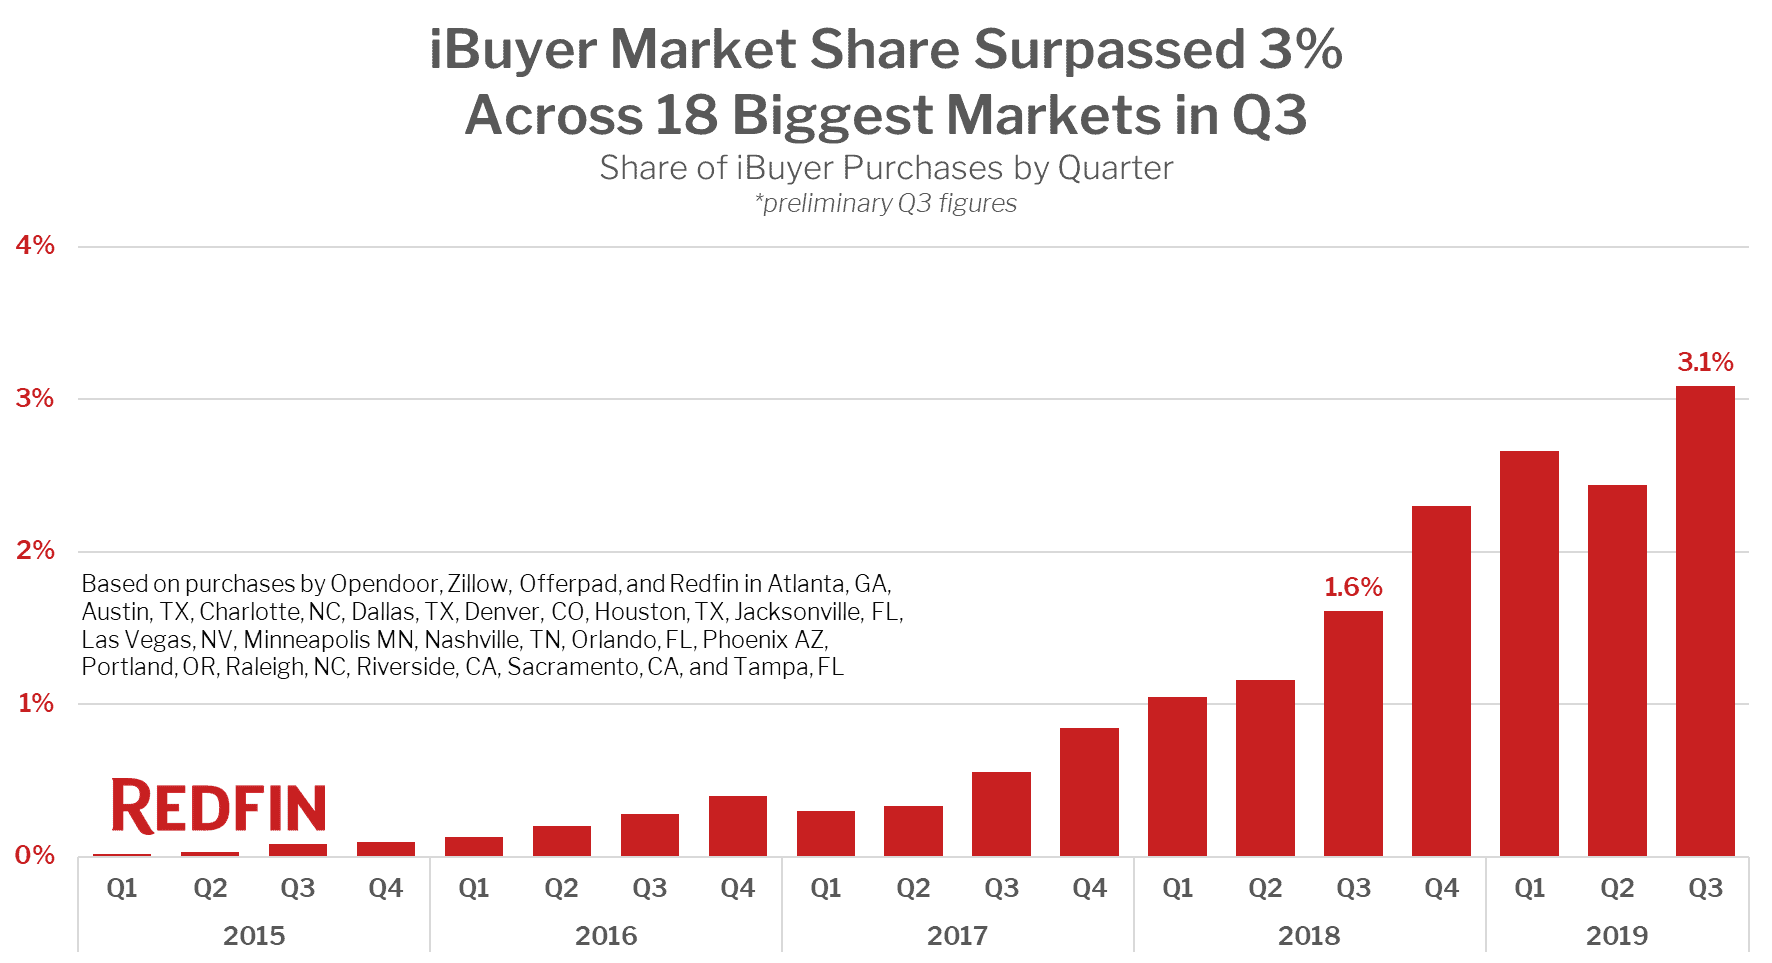 iBuyer Market Share Surpassed 3% Across 18 Biggest Markets in Q3